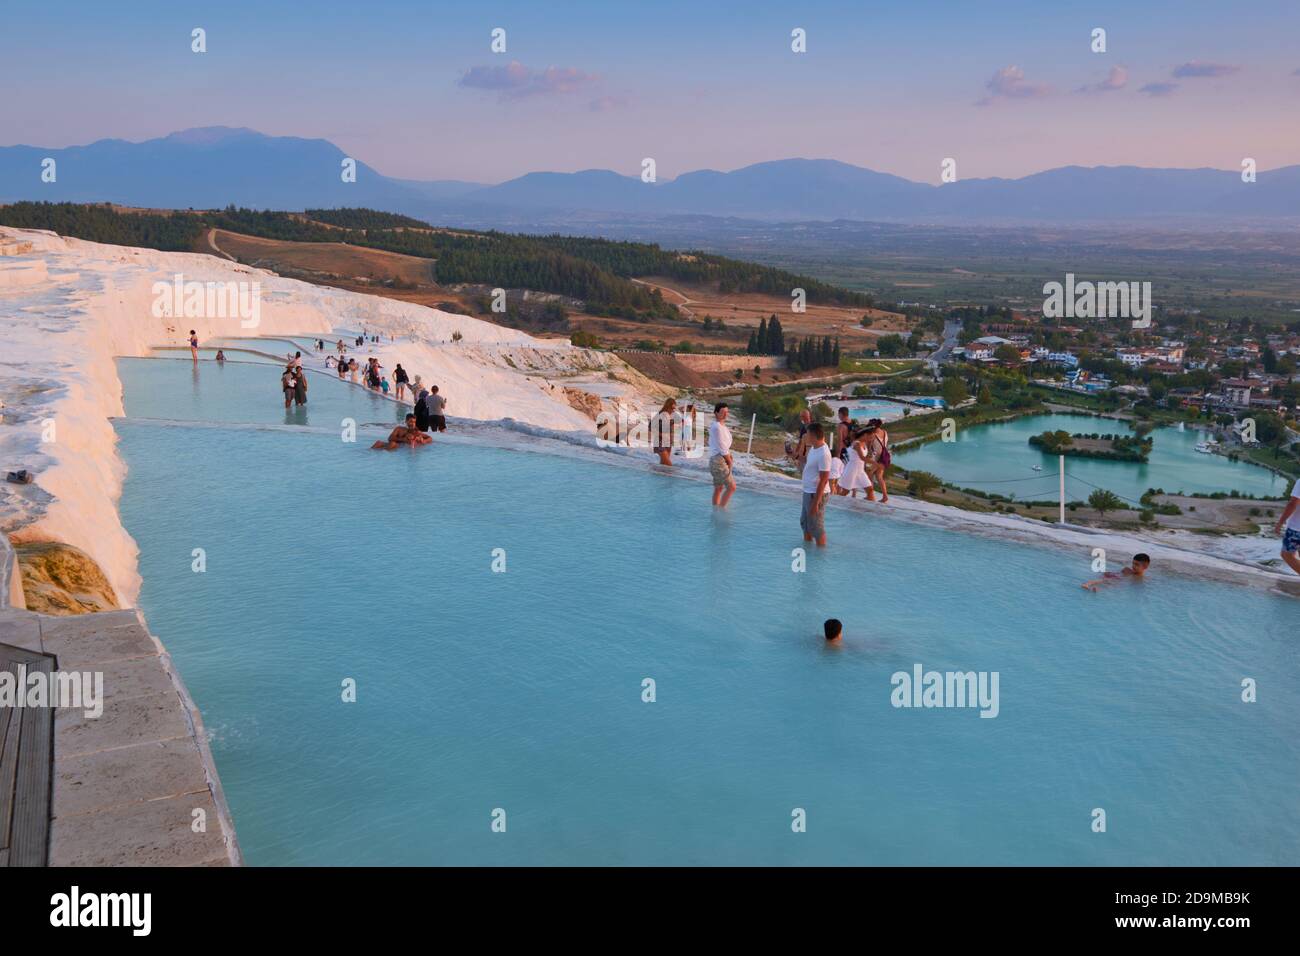 The Big Travertine Pool in Pamukkale, Turkey Stock Photo